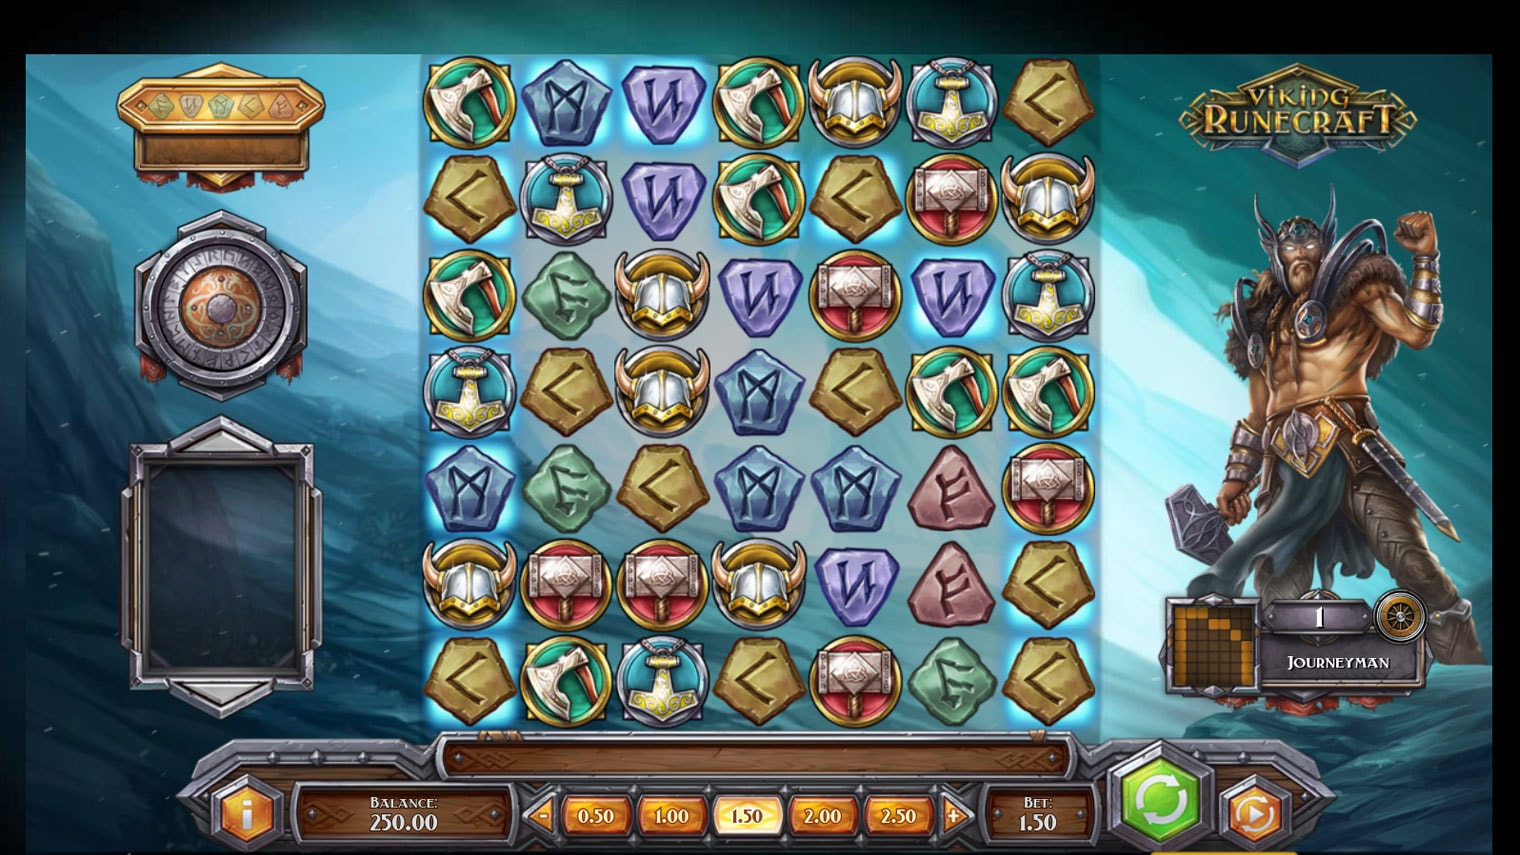 viking runecraft screenshot